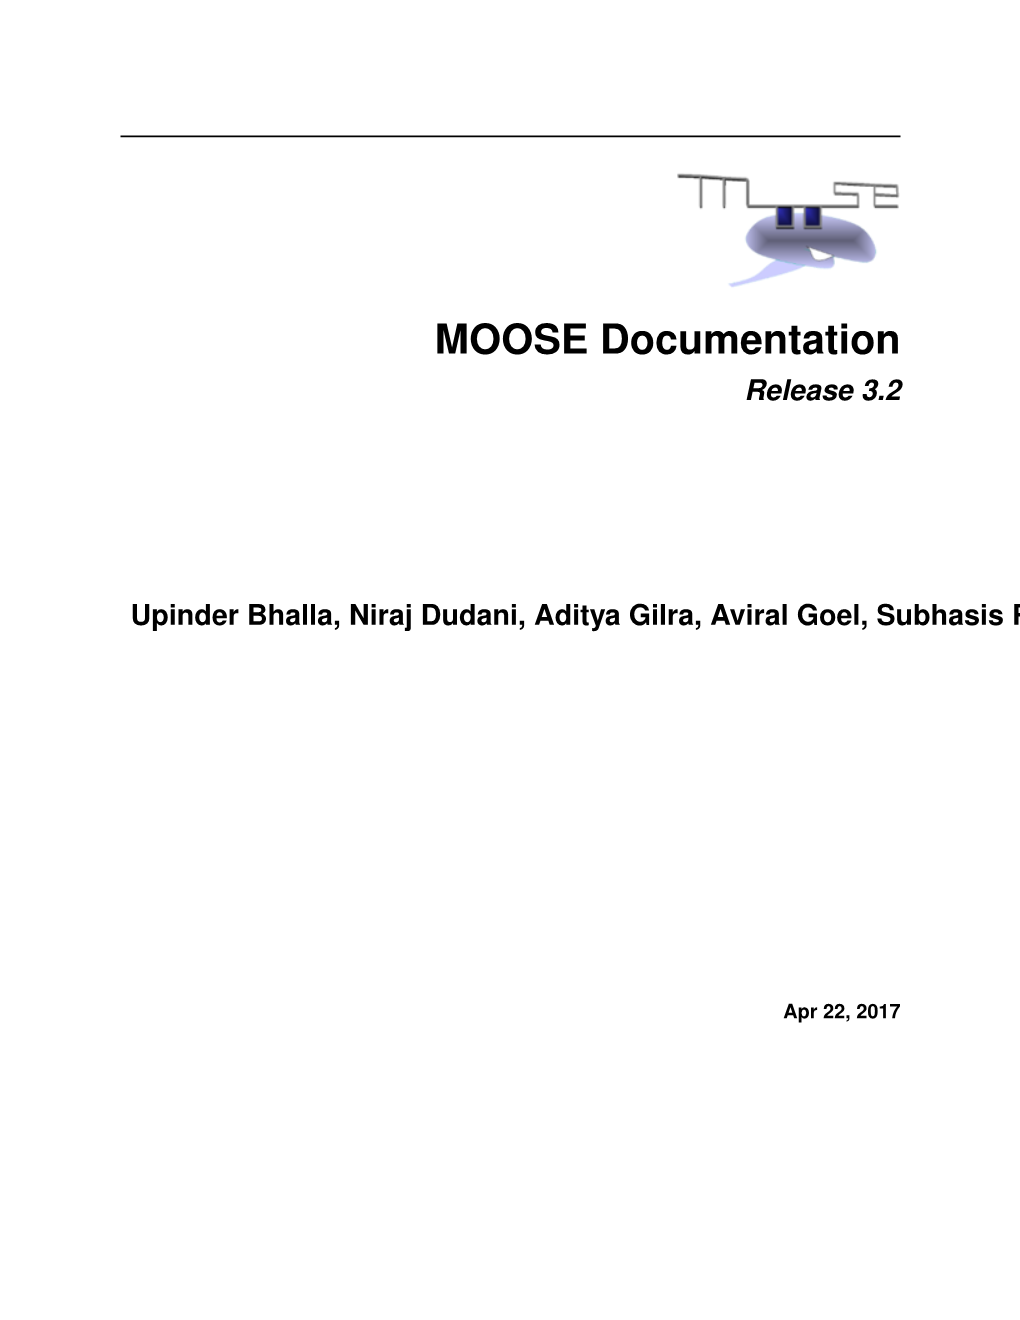 MOOSE Documentation Release 3.2